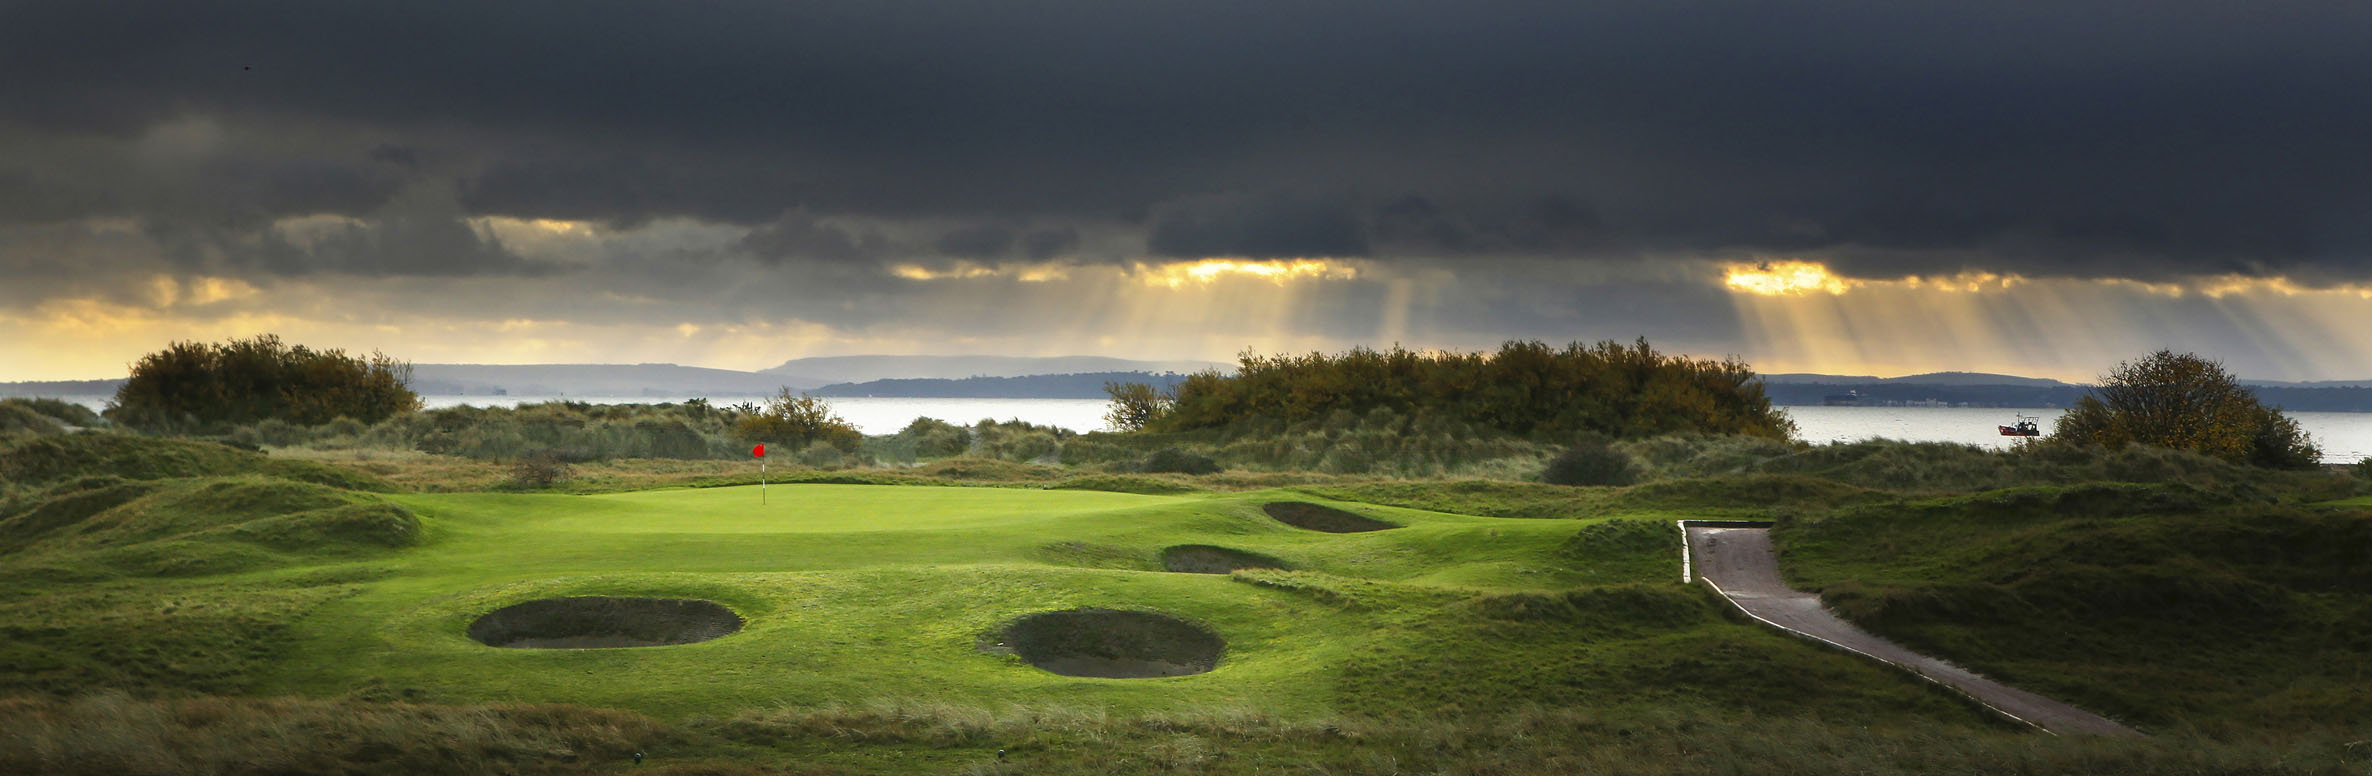 Golf Course Image - Hayling Golf Club No. 11